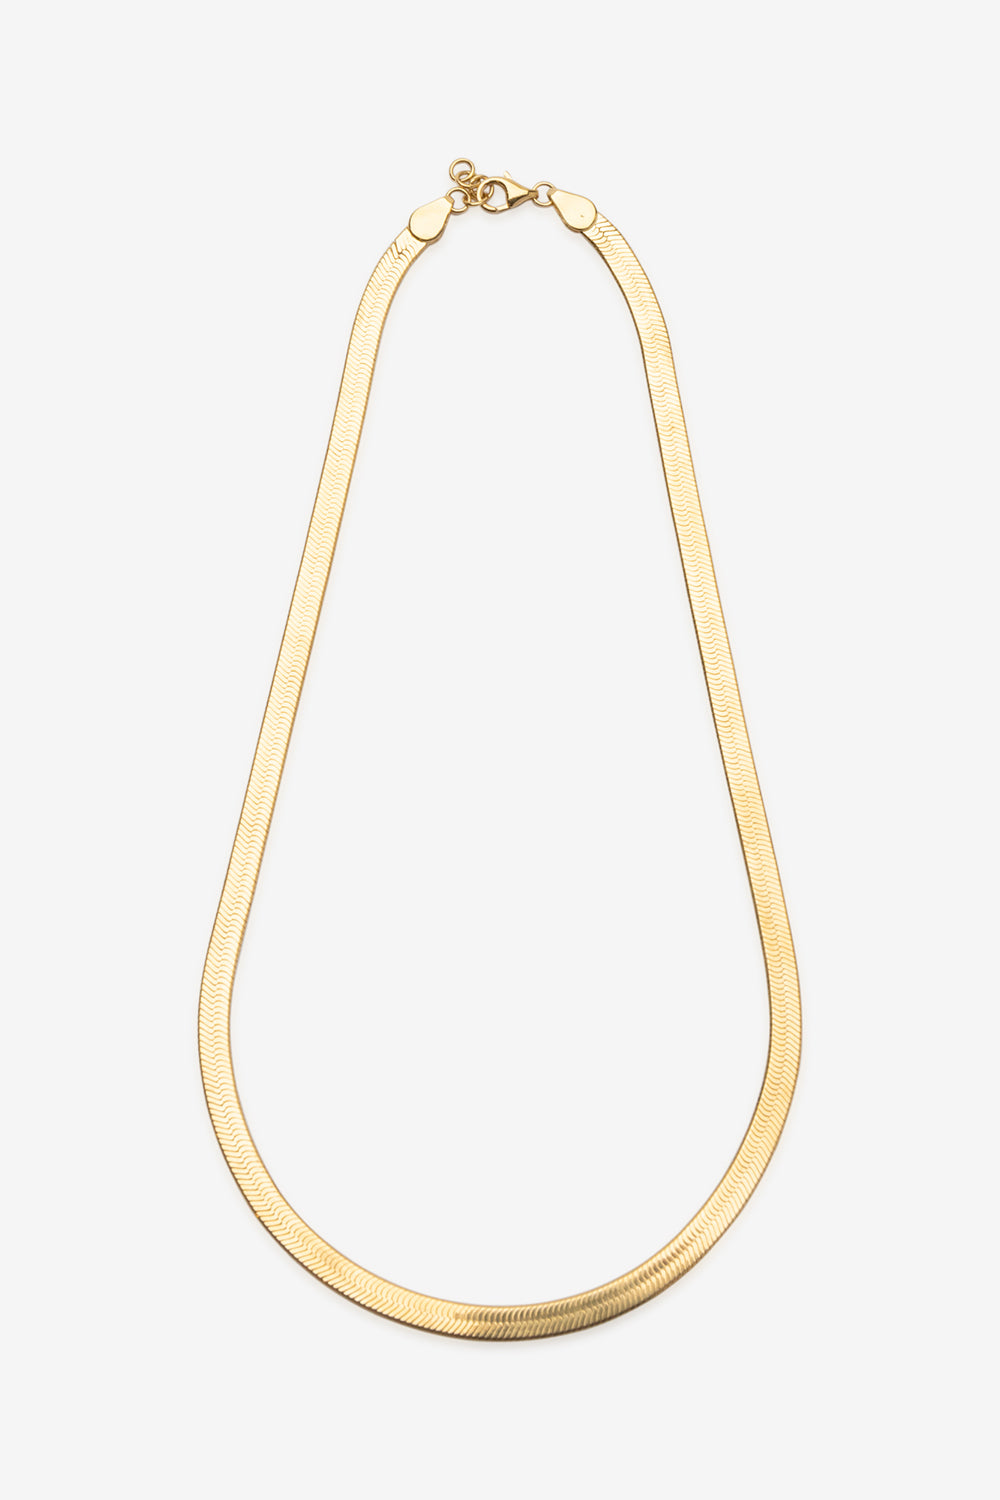 Flash Jewellery Allure Chain Necklace 14k Gold Vermeil